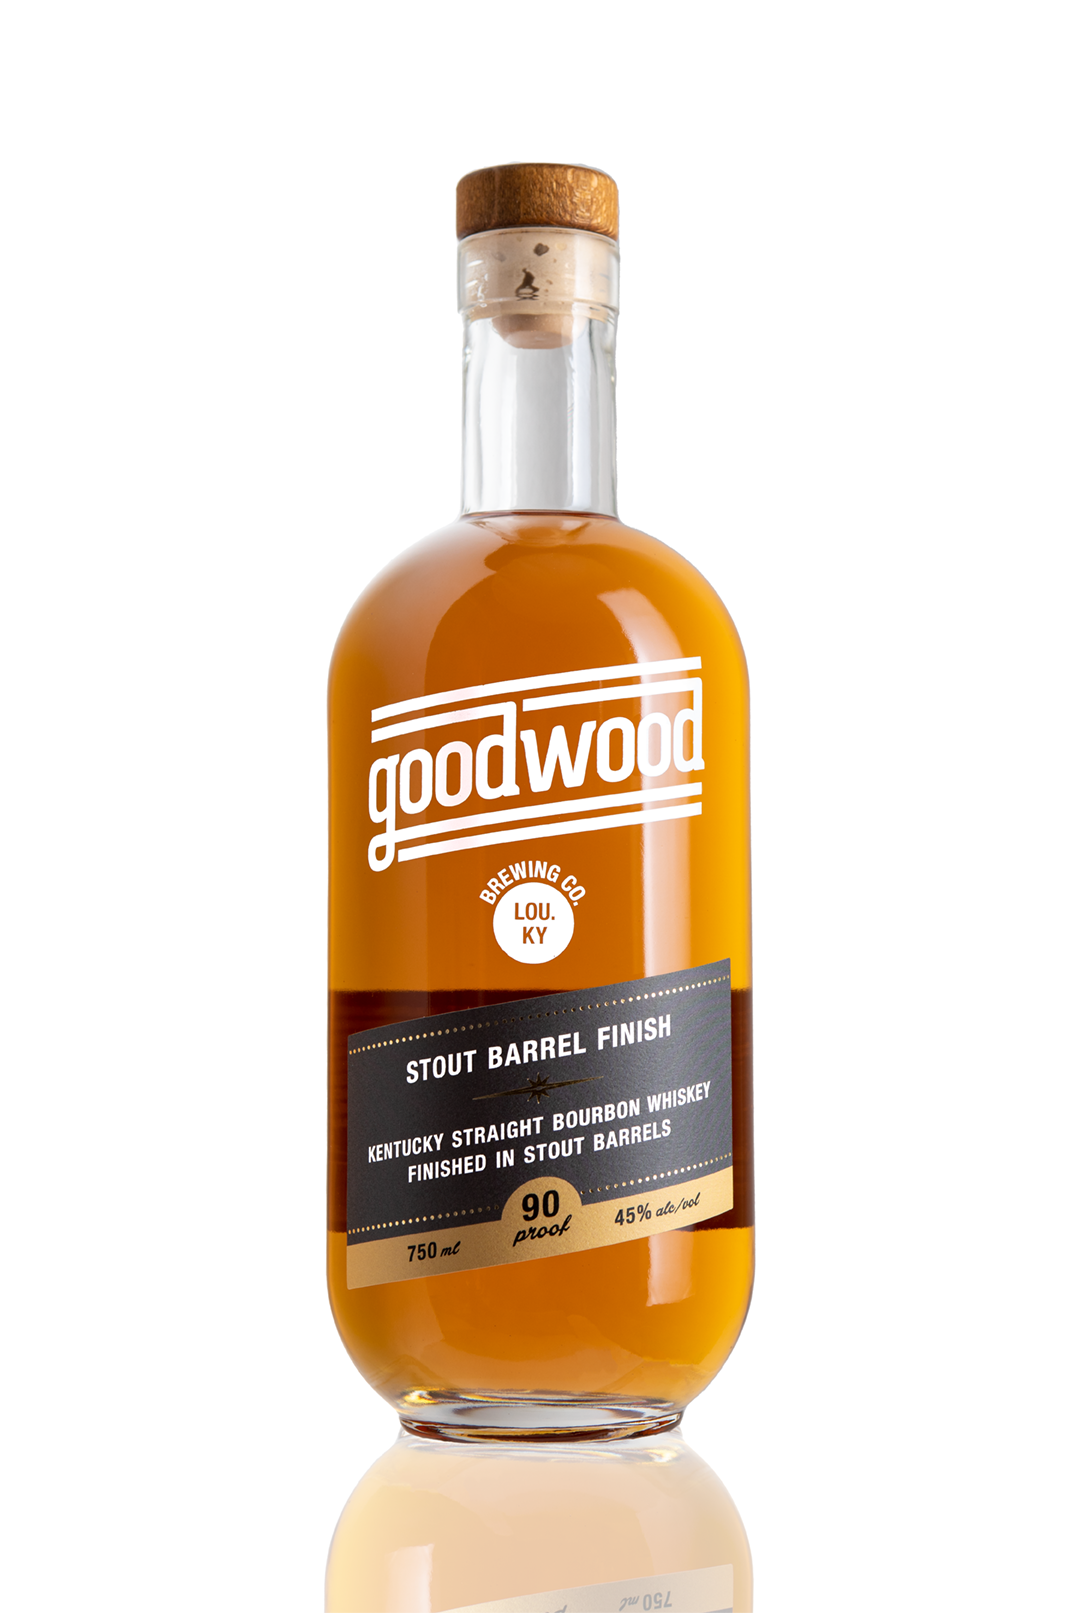 Goodwood Stout Barrel Finish